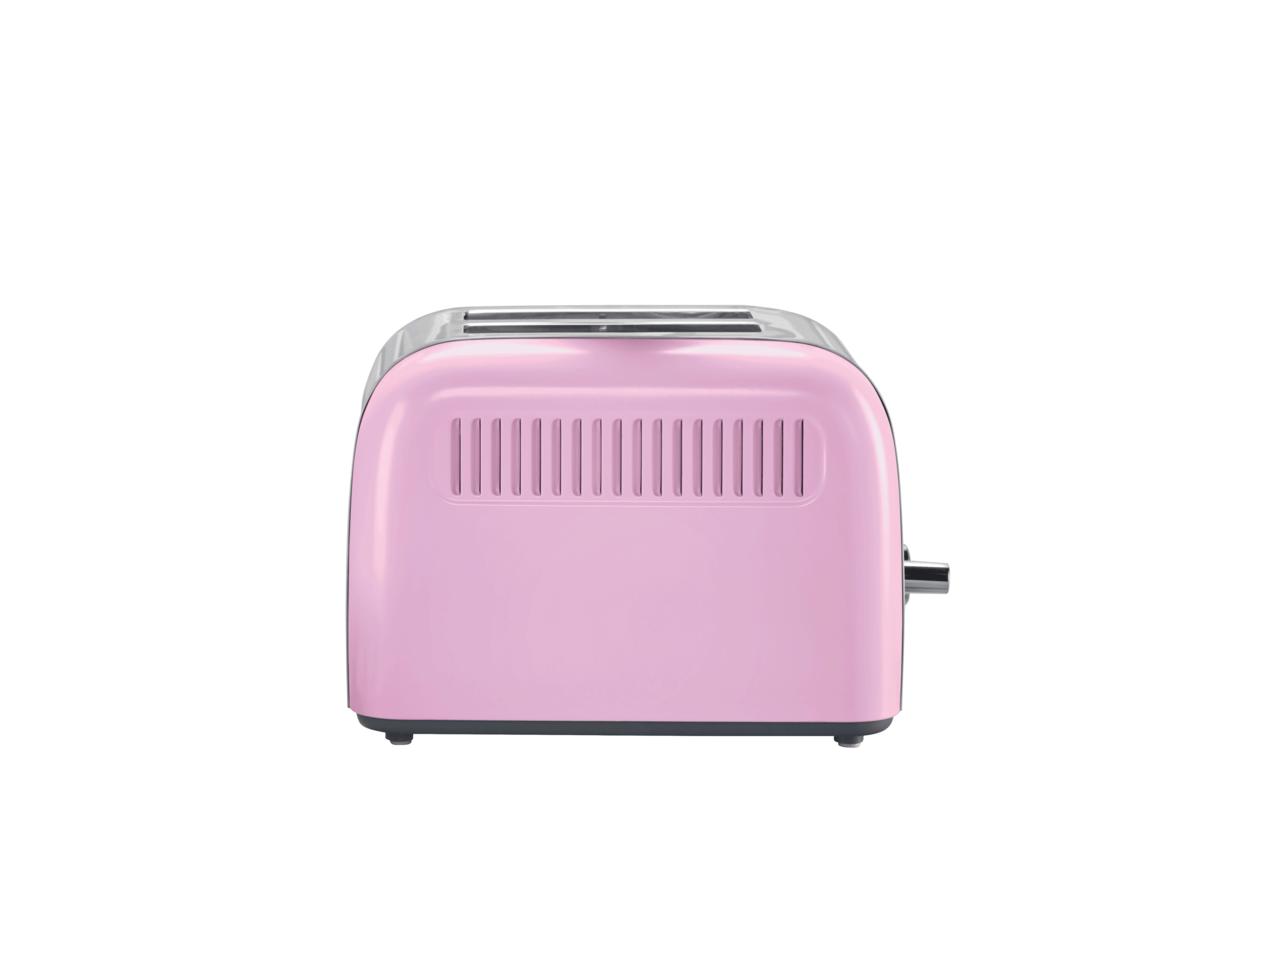 SILVERCREST 920W Toaster